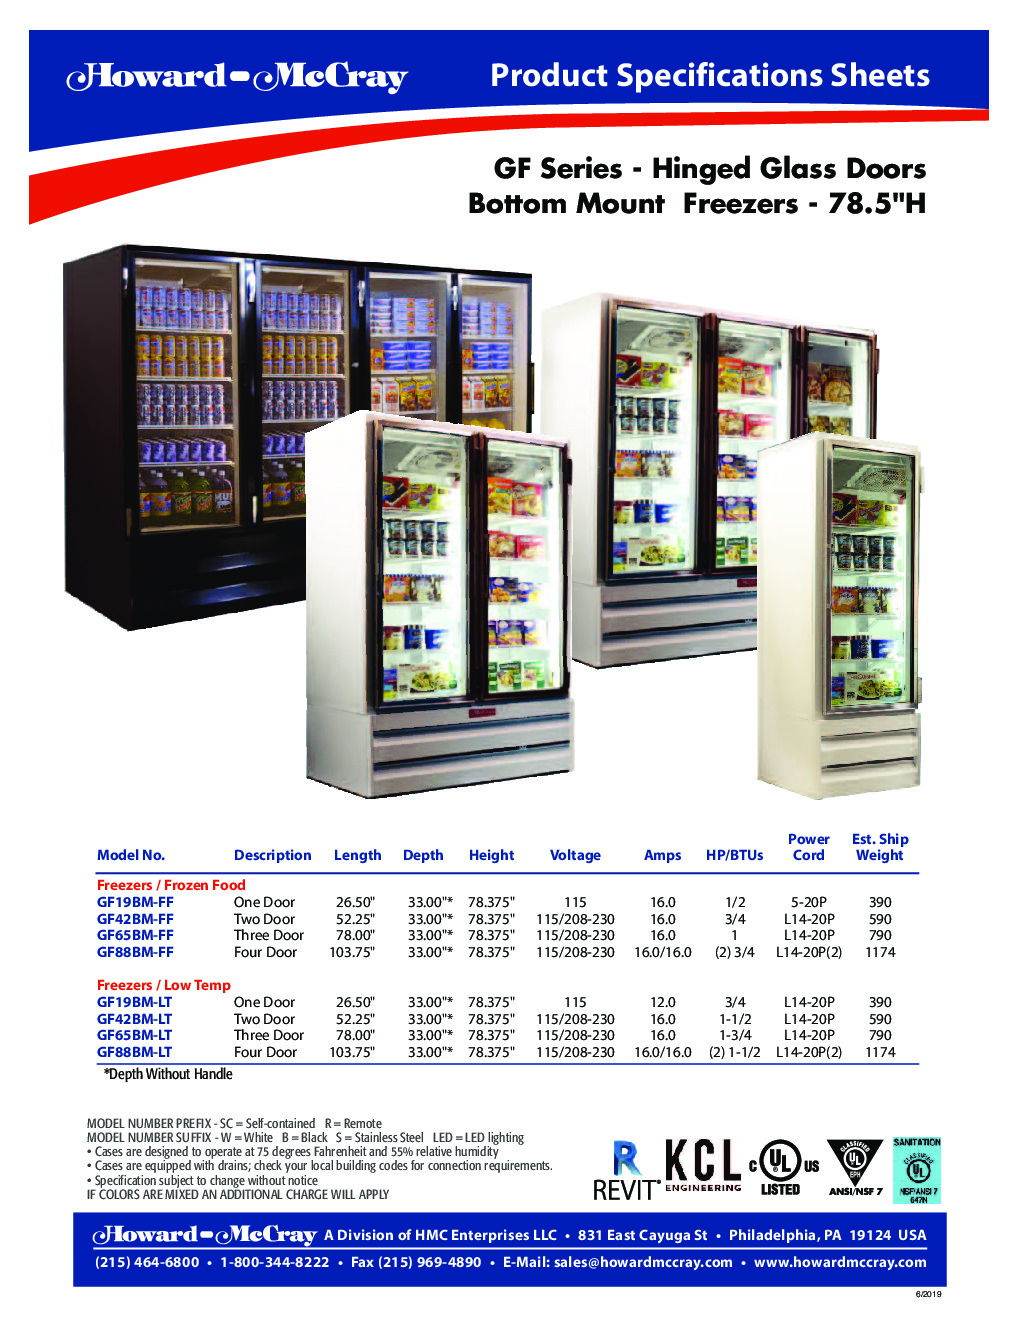 Howard-McCray GF75BM-LT-B Merchandiser Freezer